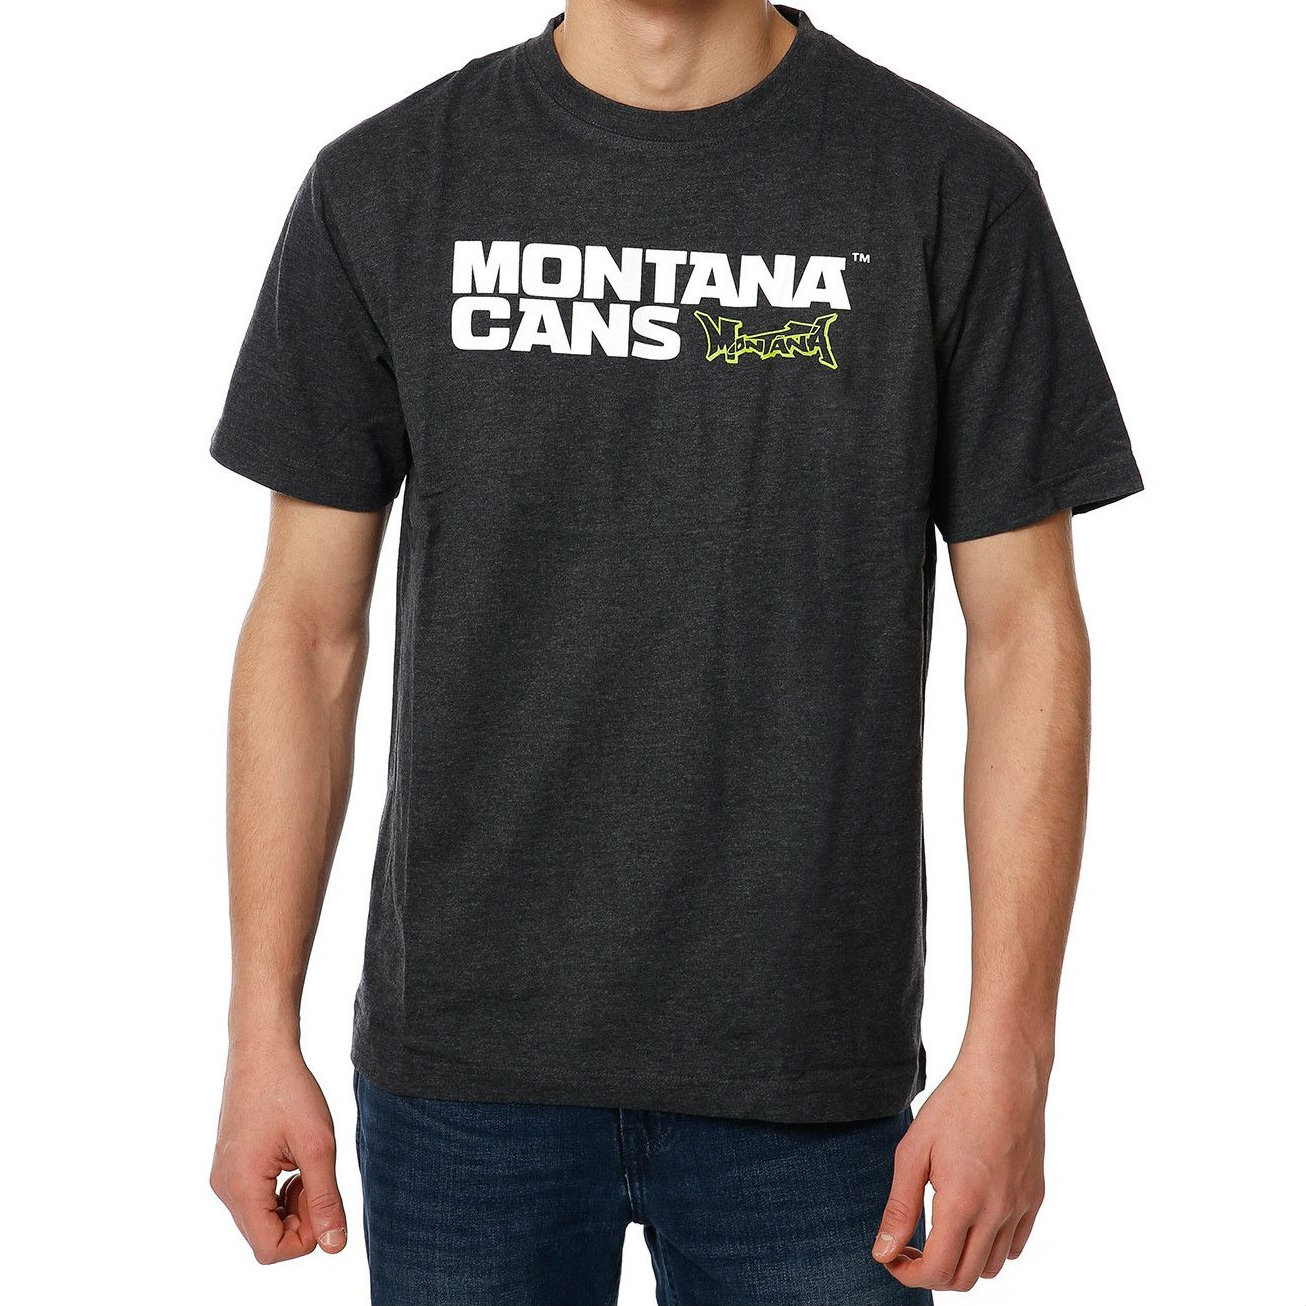 Футболка Монтана Кенс. Montana cans одежда. Montana cans майка. Кофта Montana cans. Montana cans